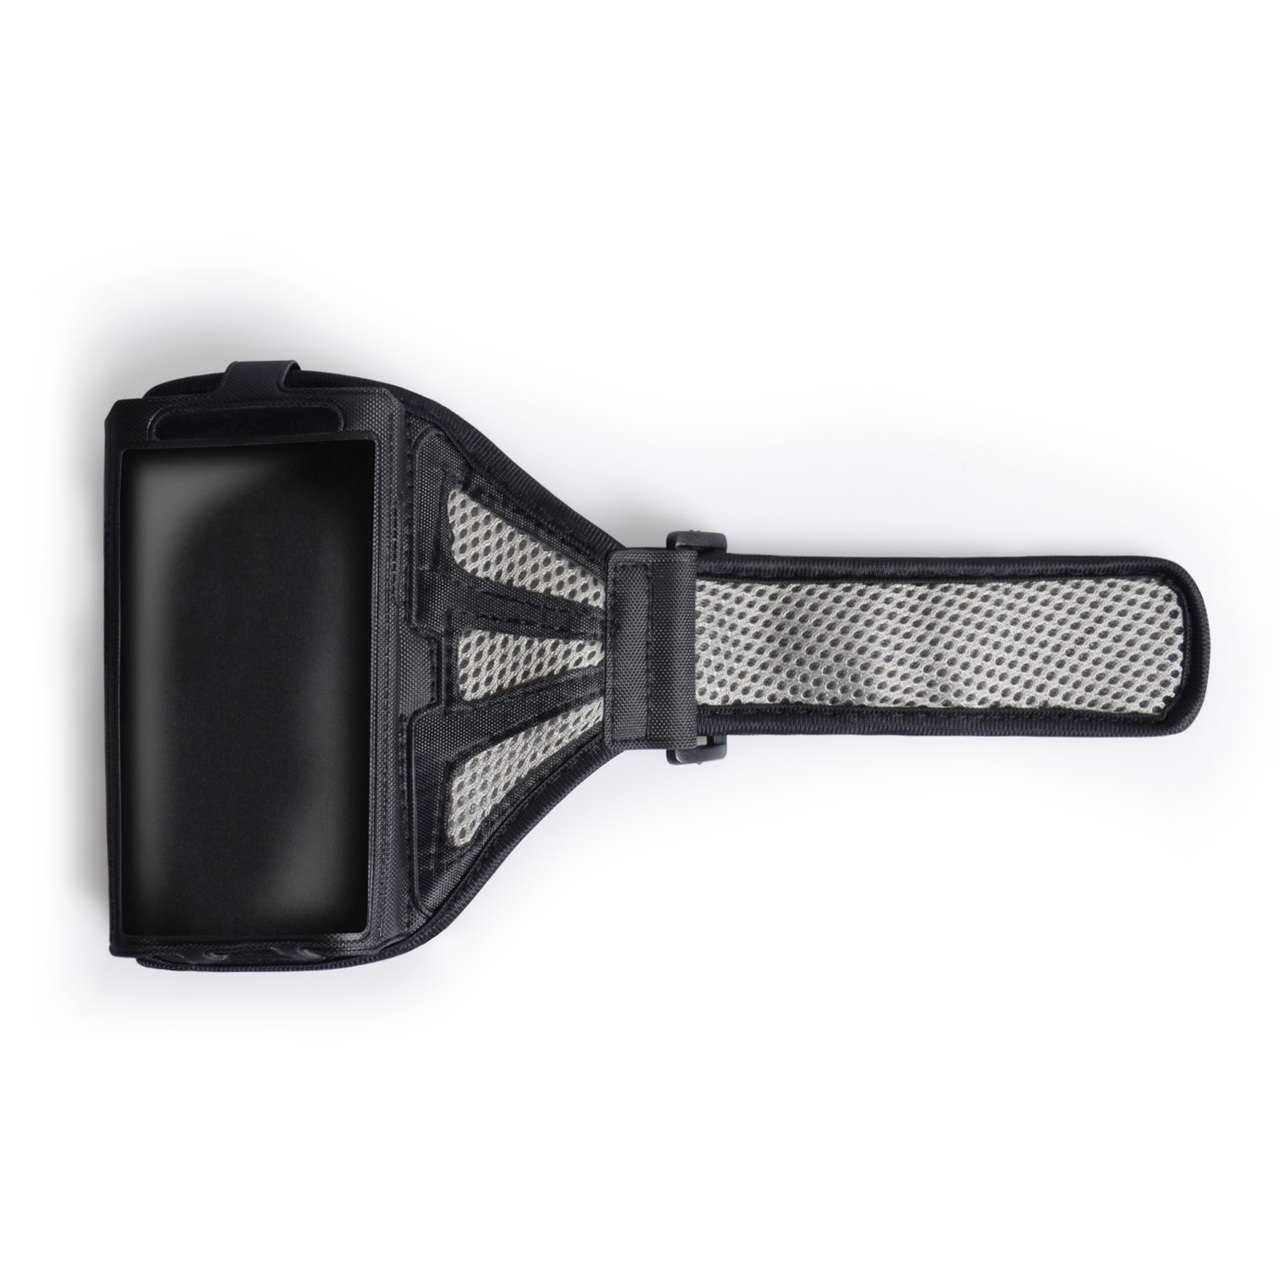 YouSave Accessories Medium Sports Armband - Black/Grey